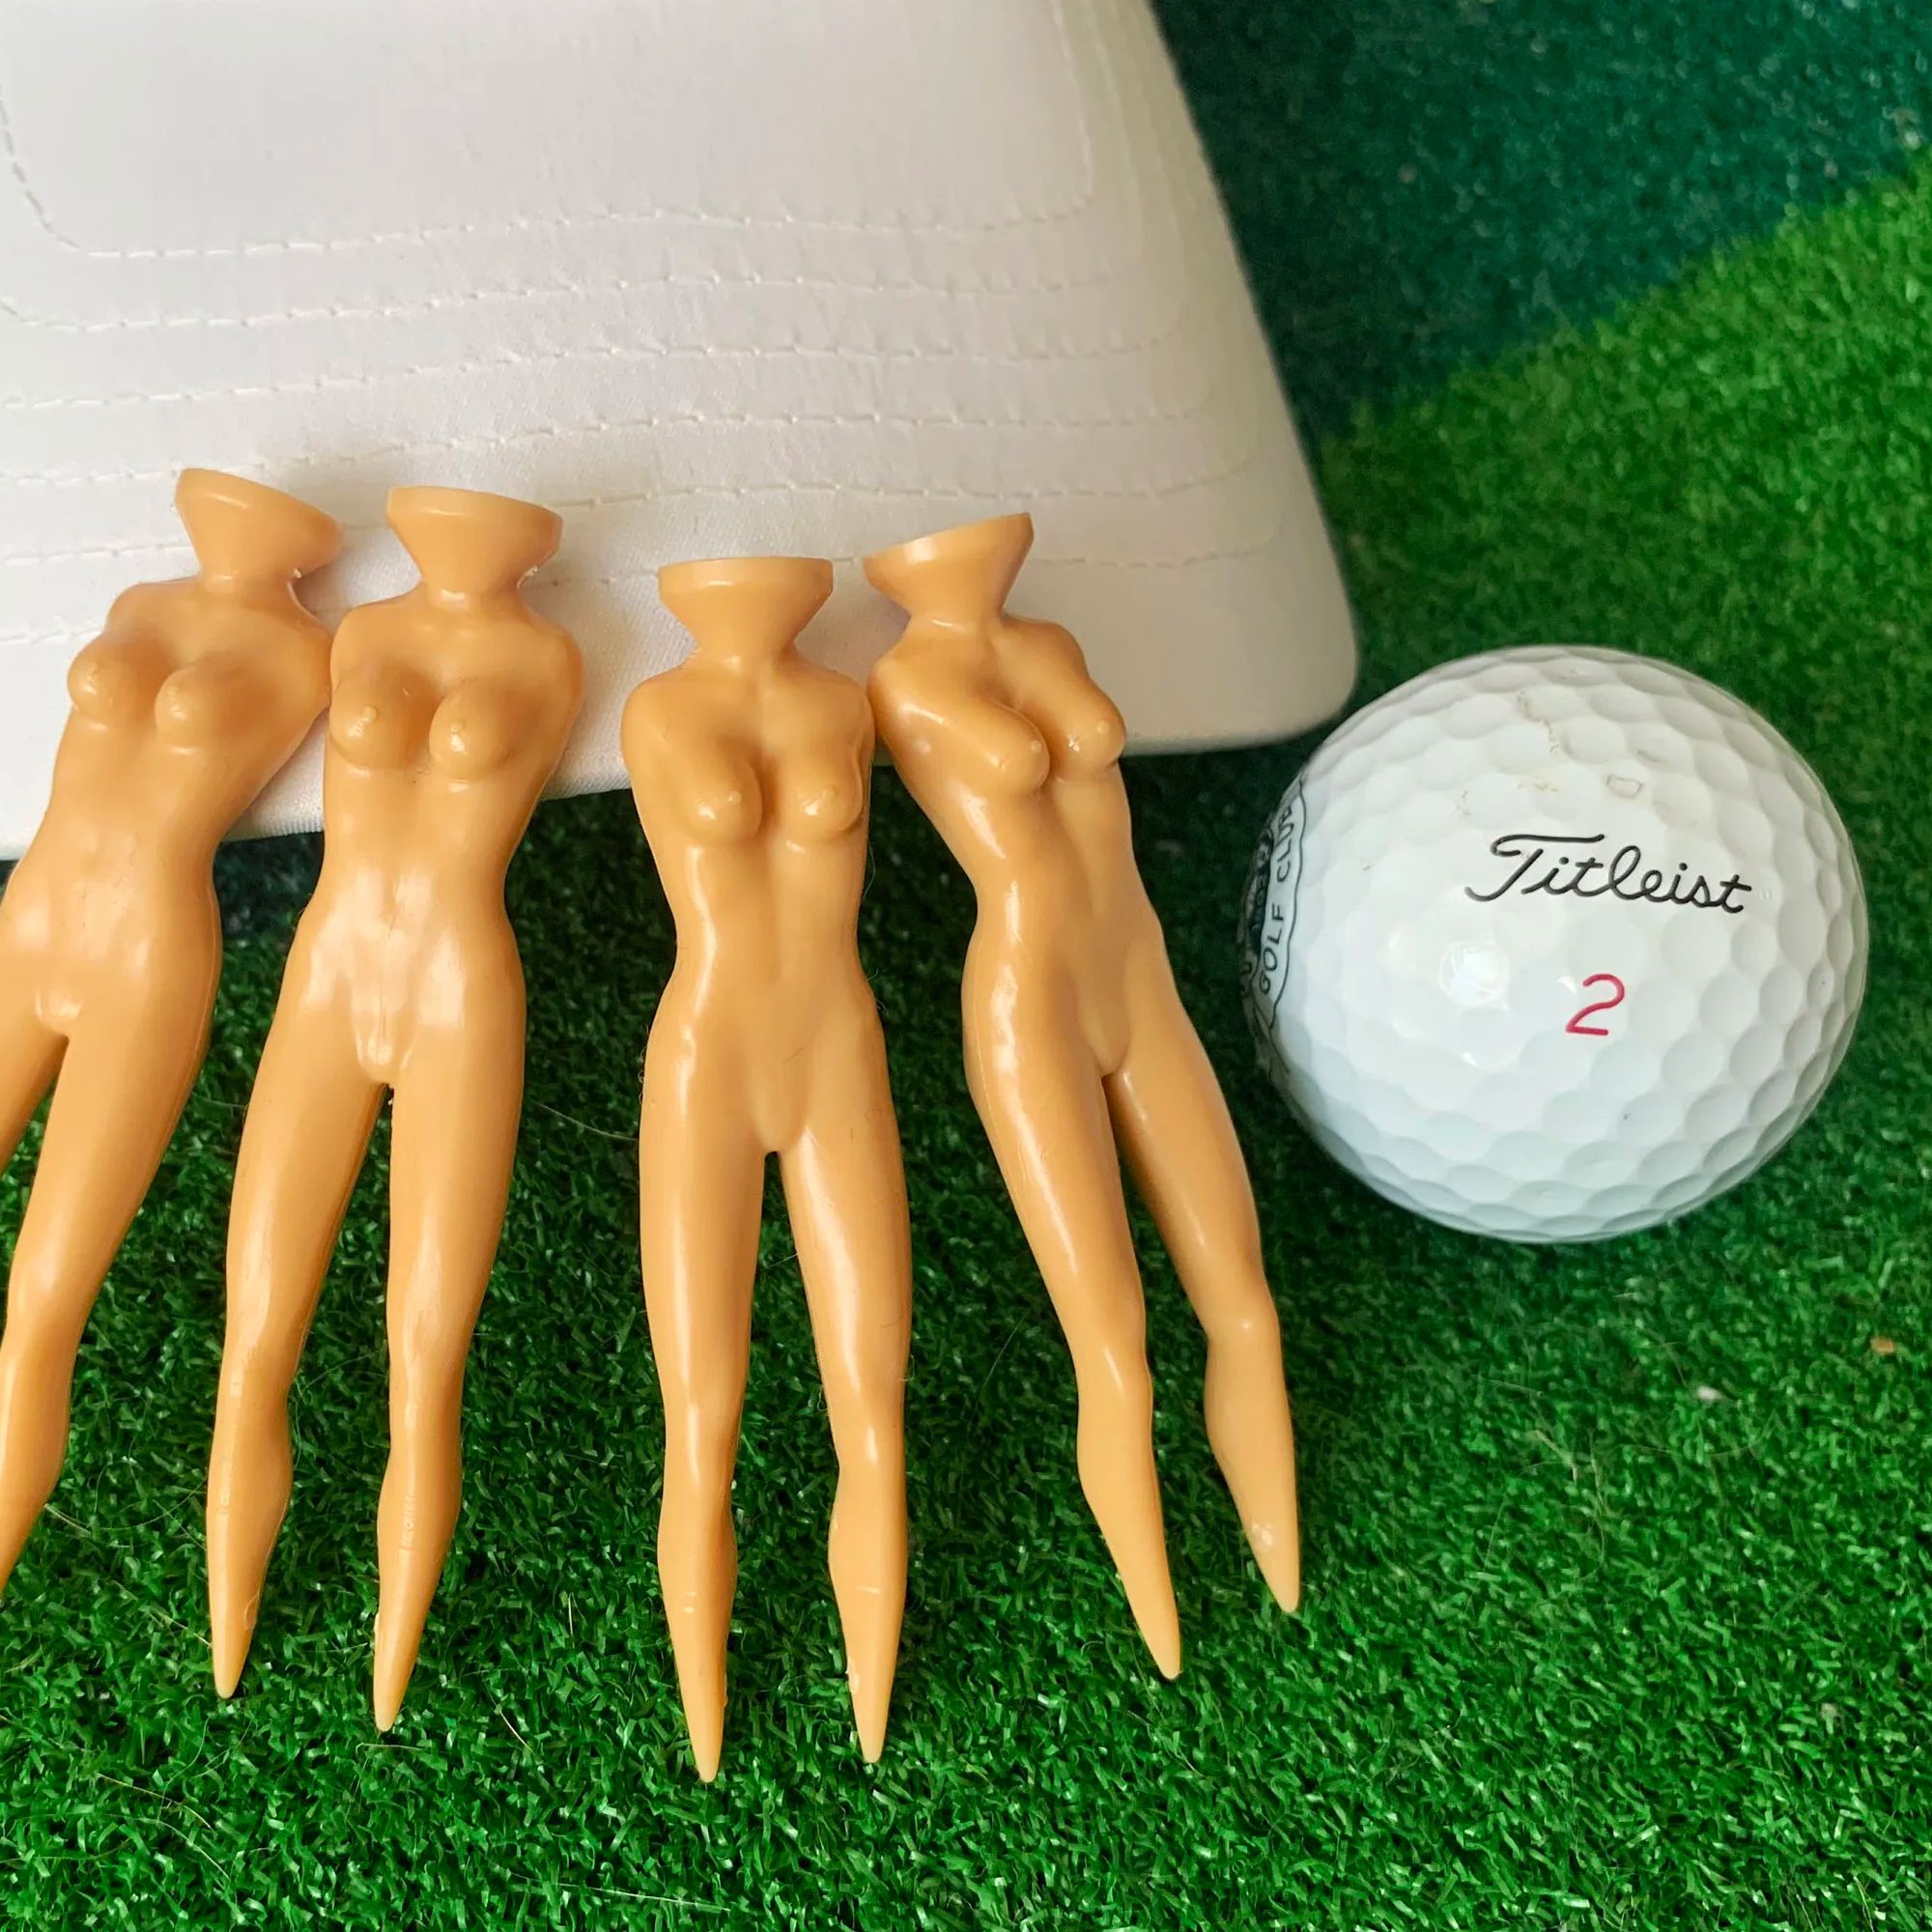 Nude Women Golf Tees - Golf Accessory divot repair tool